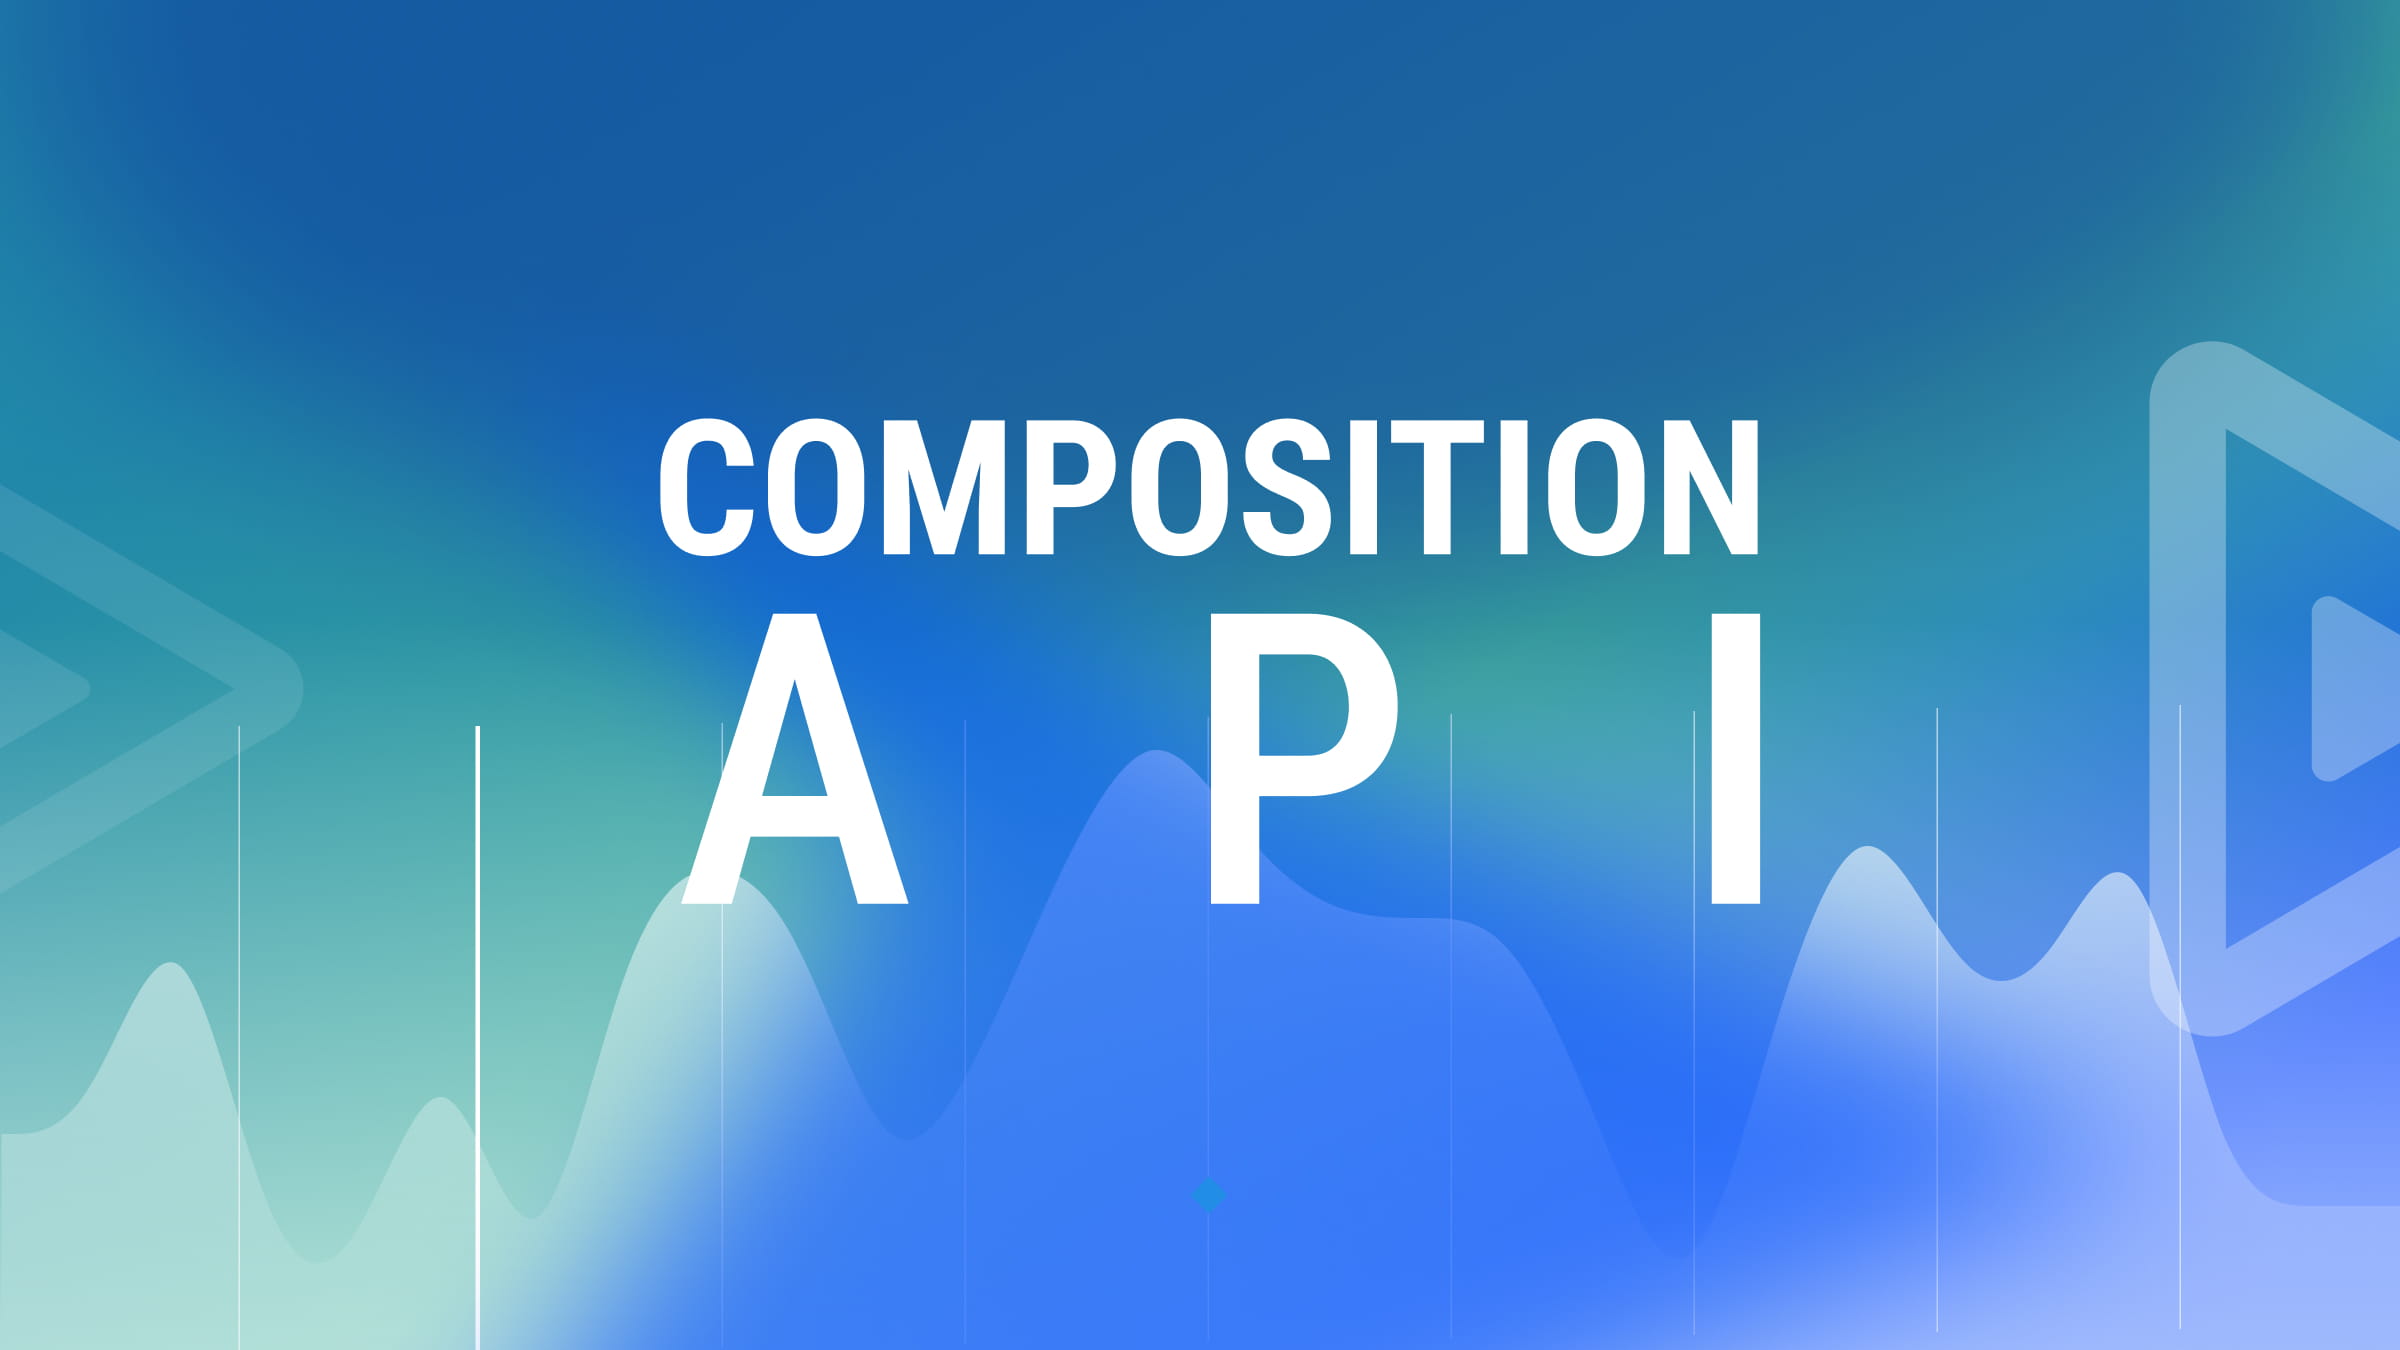 Vue Development - Exploring the Composition and Options APIs